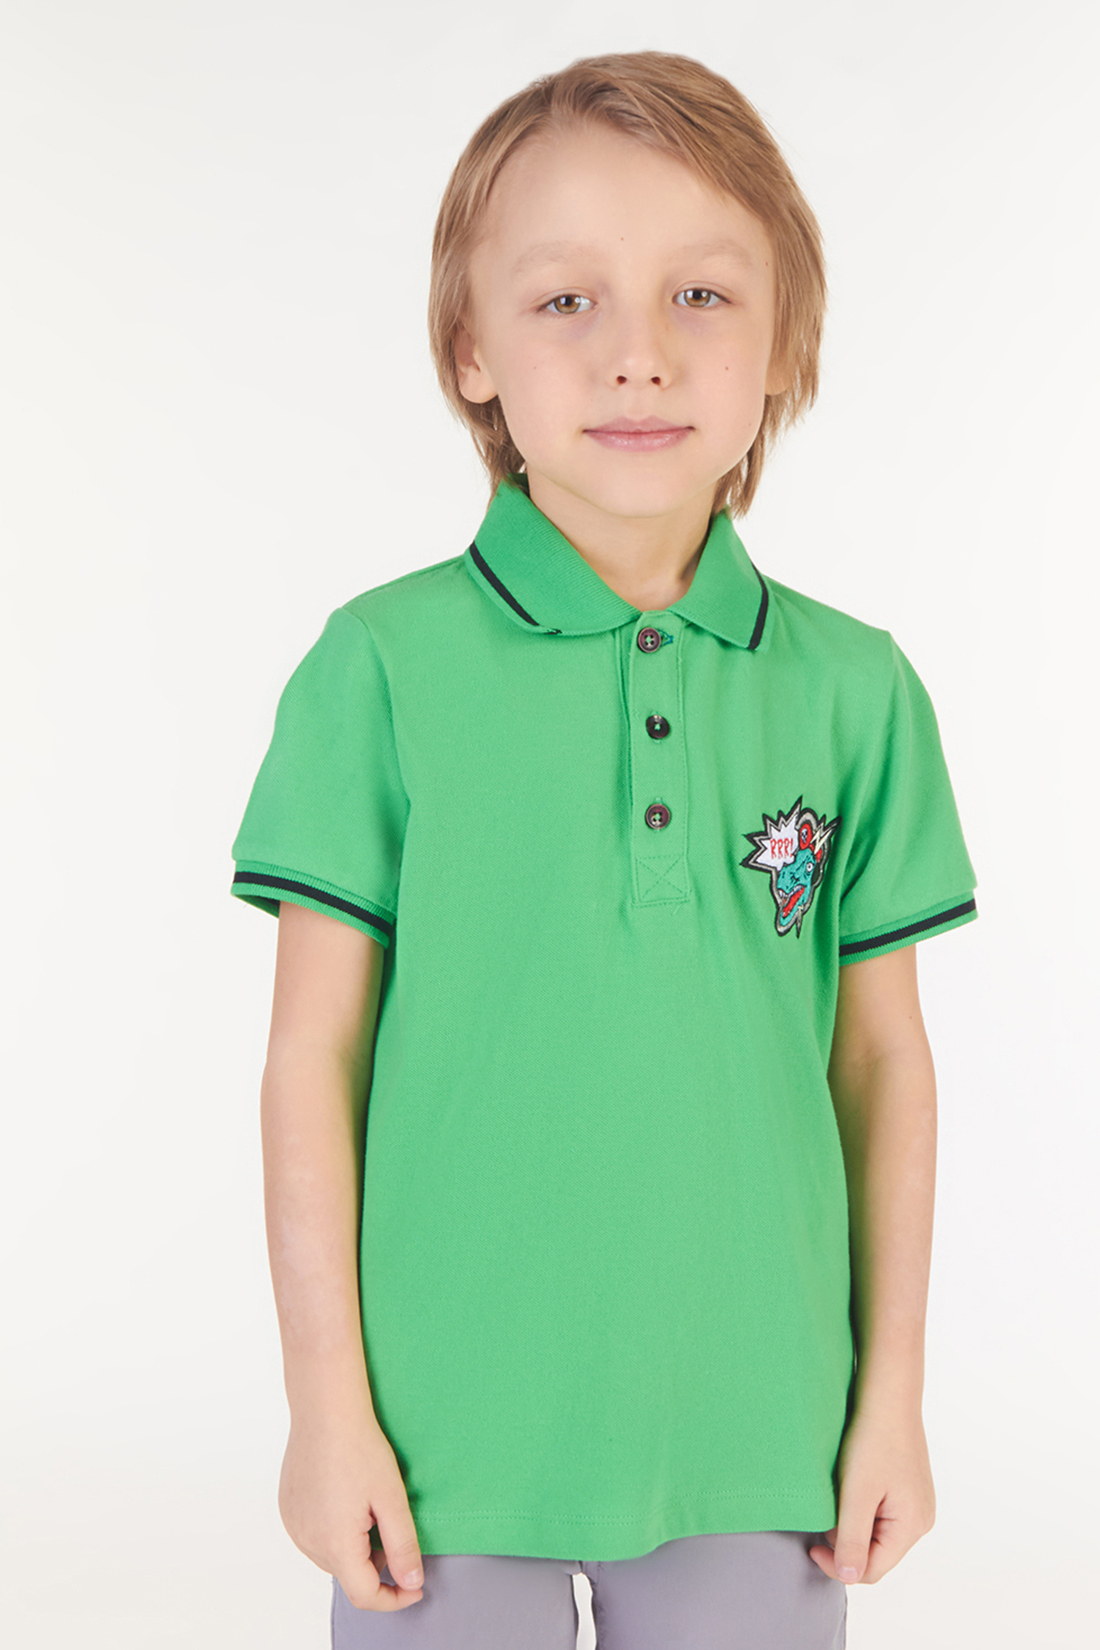 Поло для мальчика (арт. baon BK708002), размер 98-104, цвет зеленый Поло для мальчика (арт. baon BK708002) - фото 1